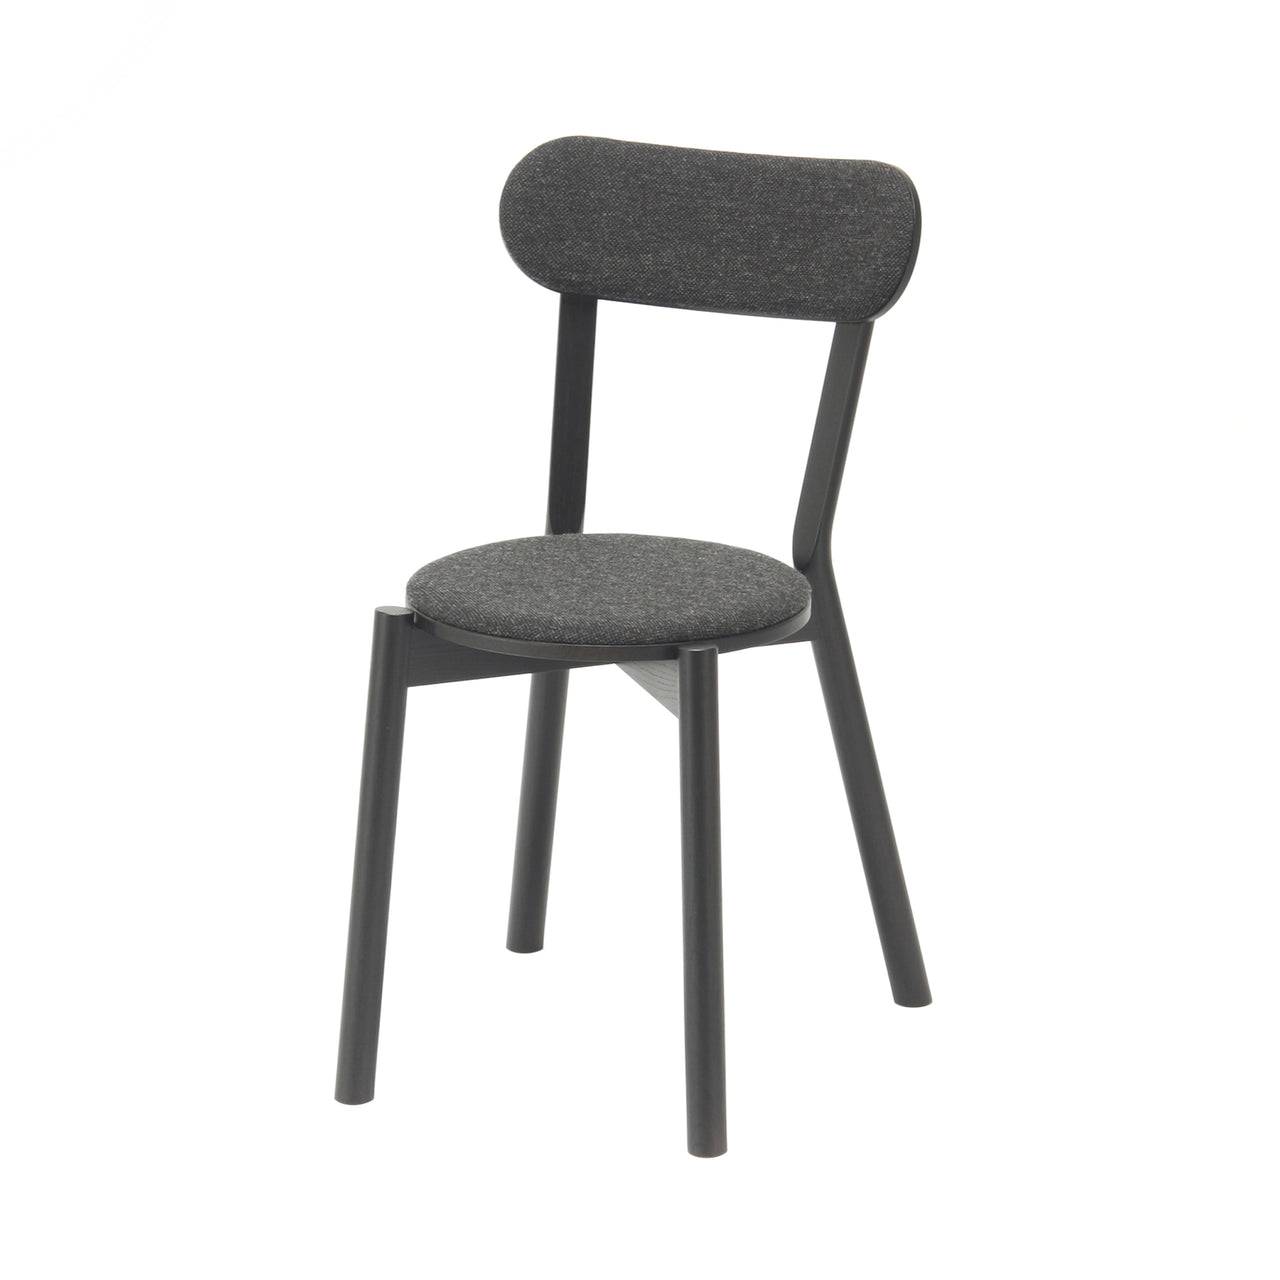 Castor Chair Pad: Black + Black Pad